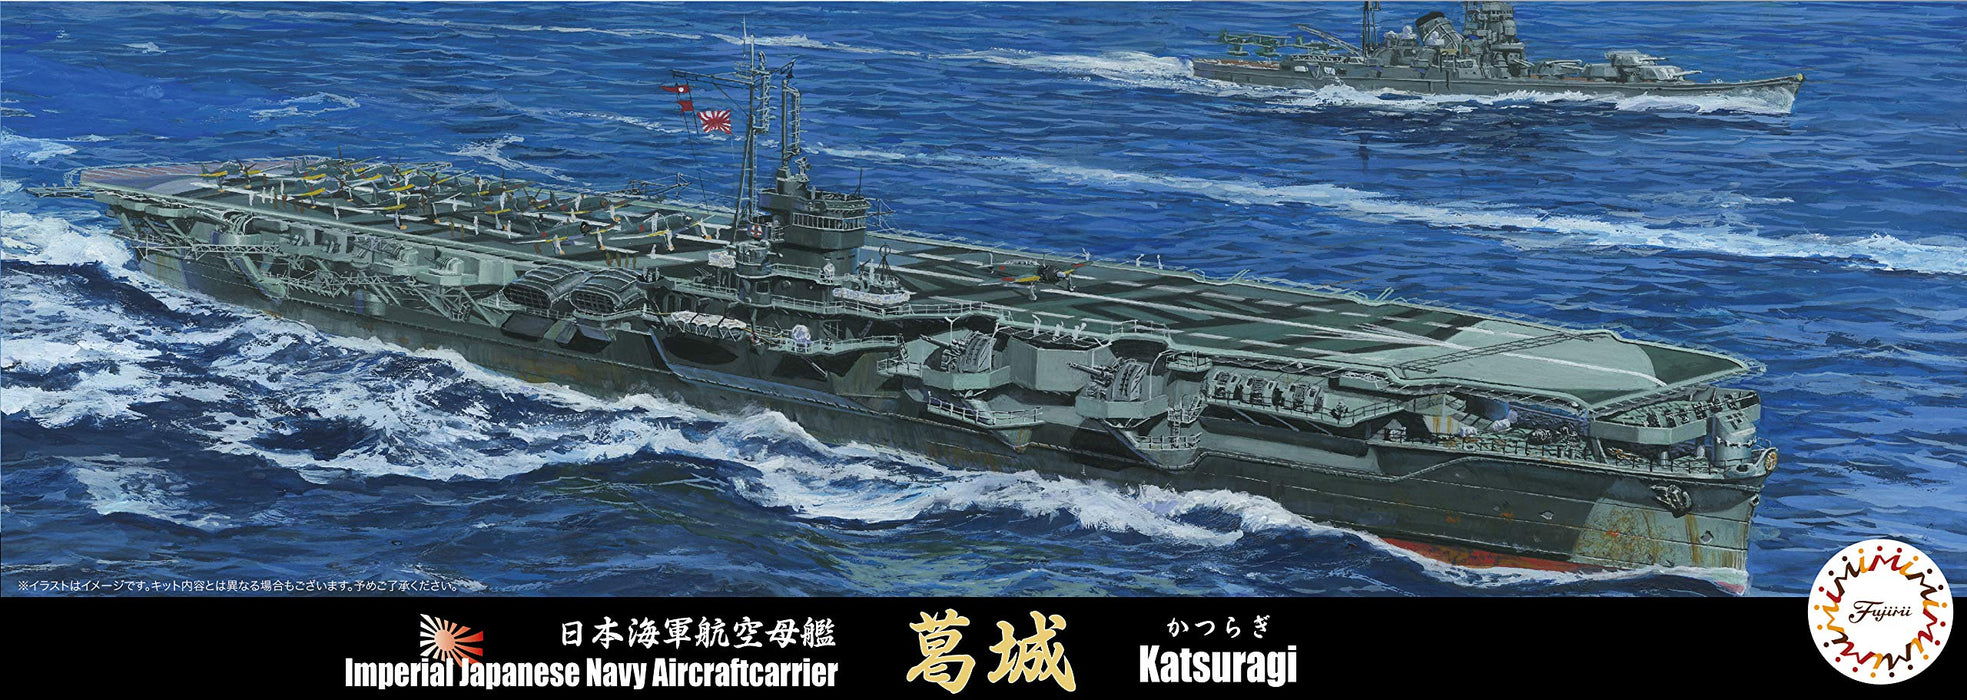 FUJIMI Toku-82 Ijn Porte-avions Katsuragi Kit à l'échelle 1/700